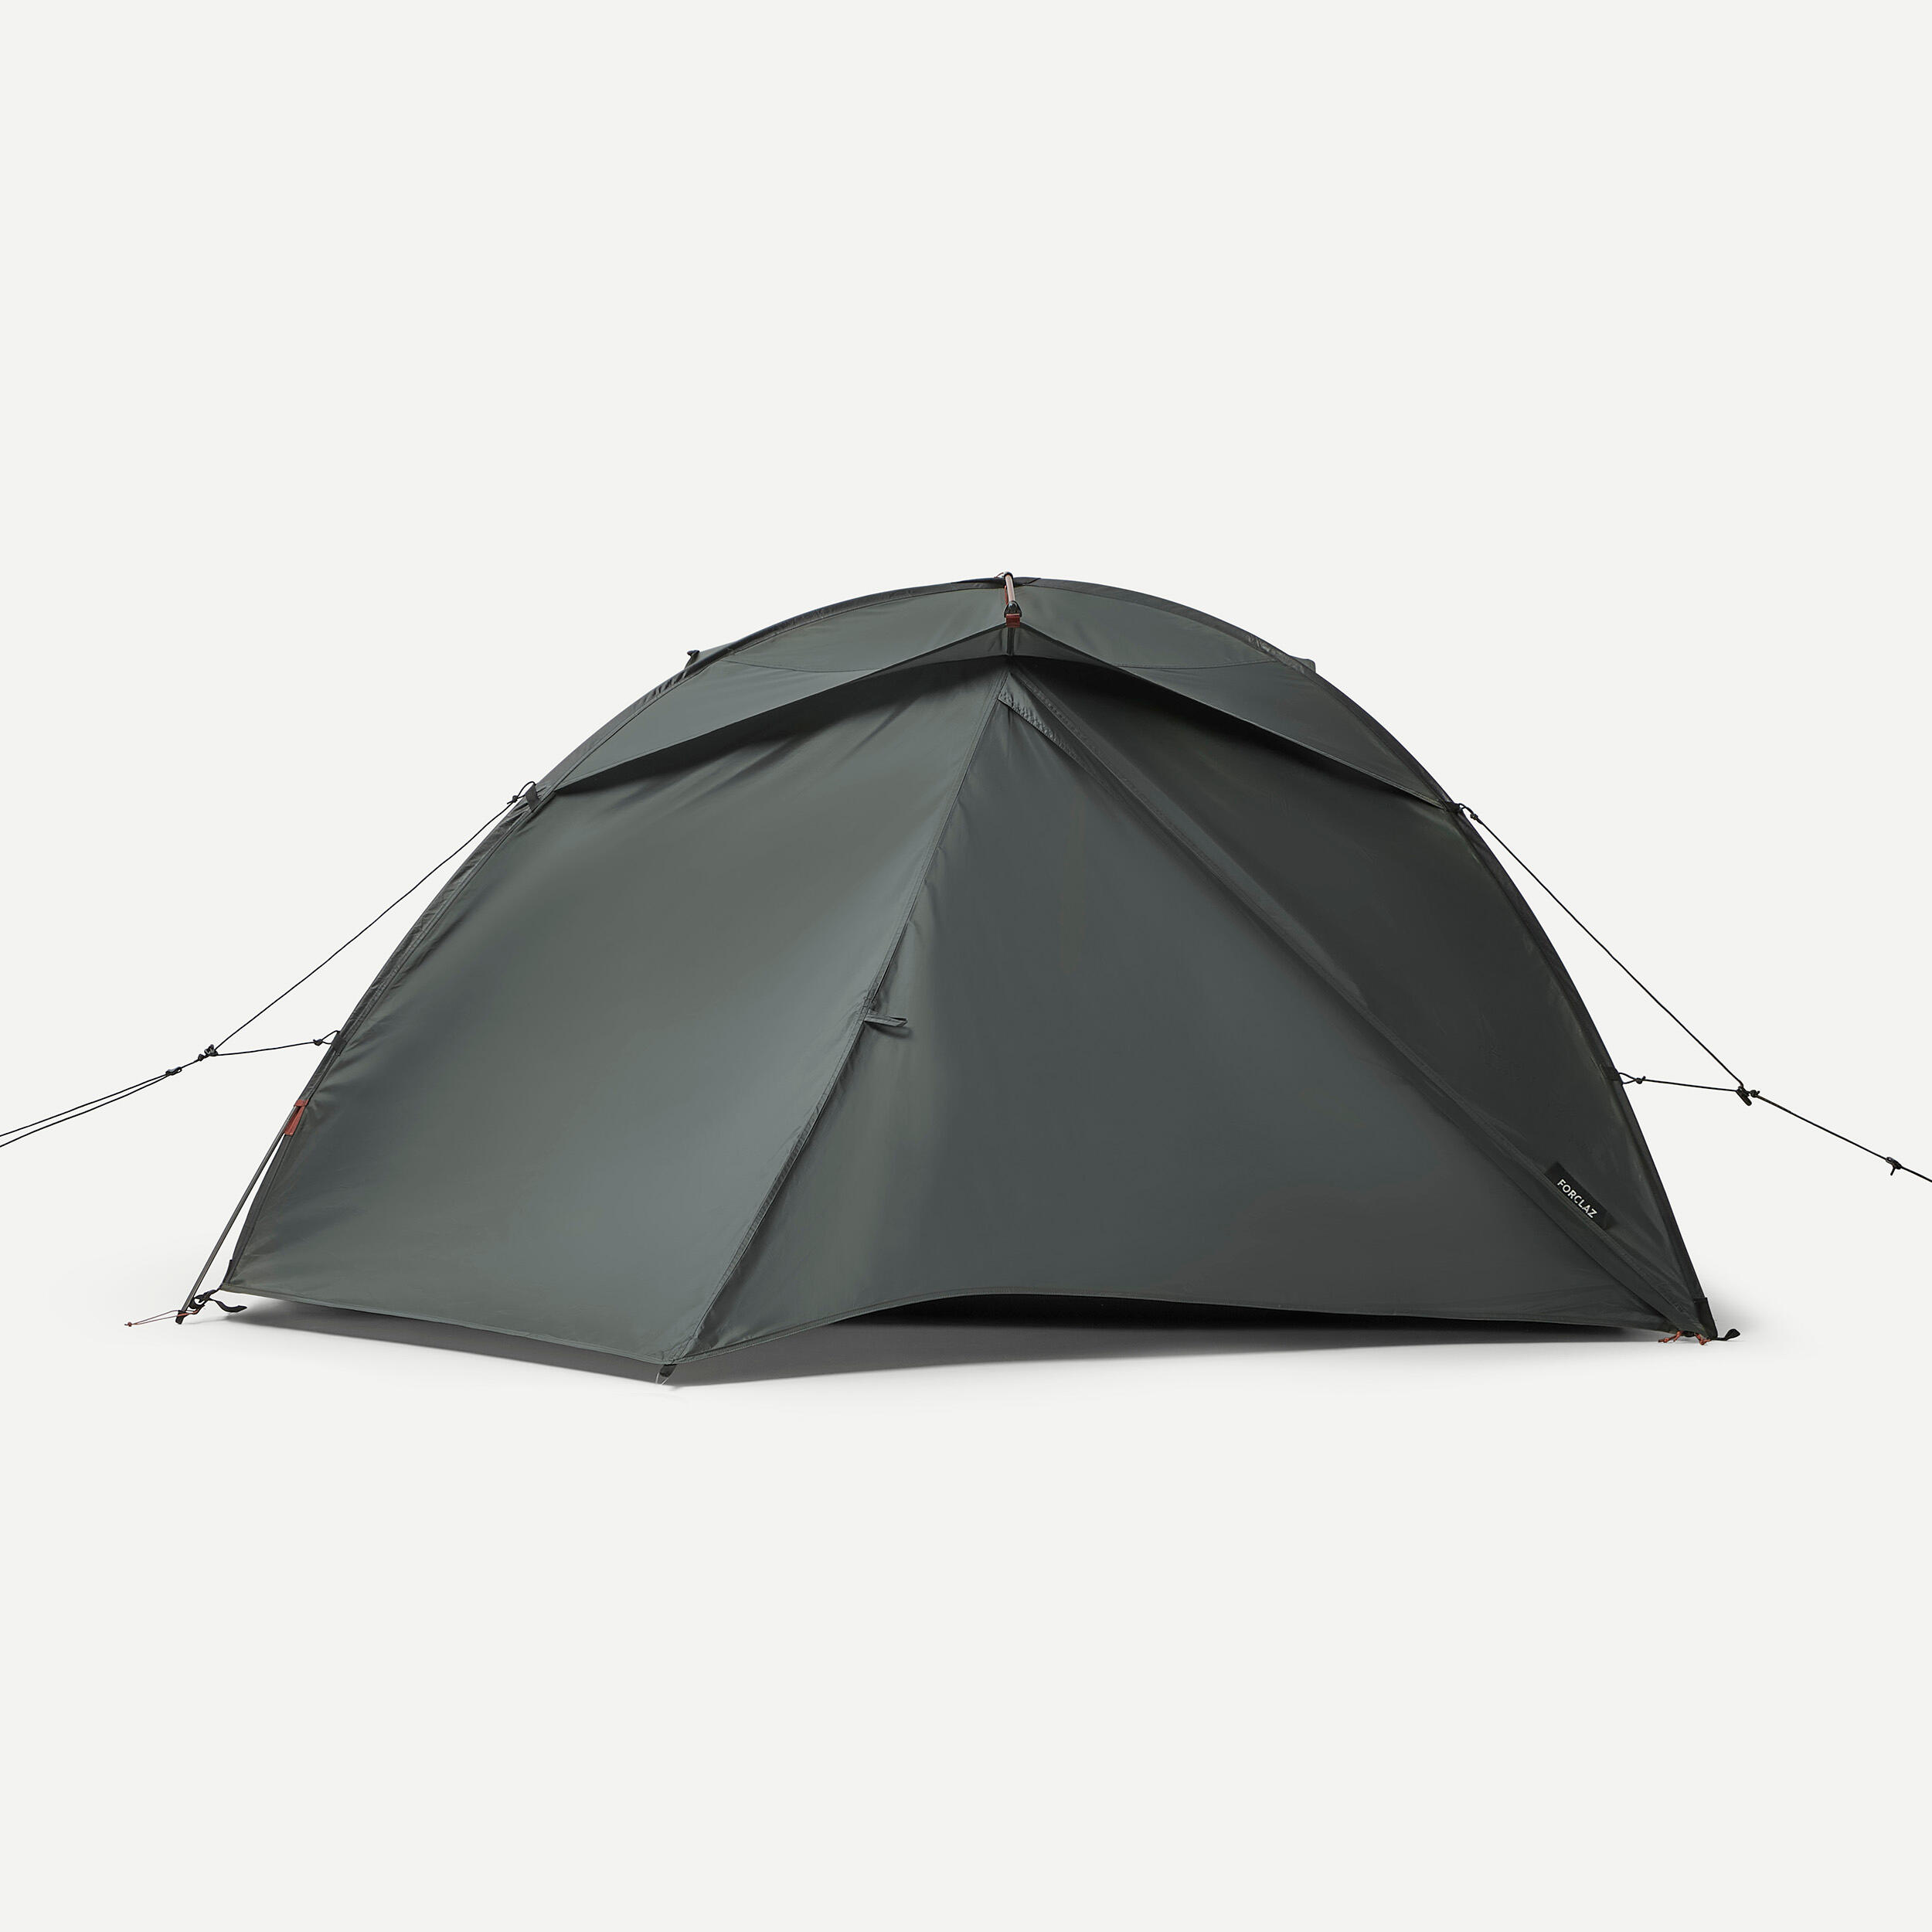 Trekking dome tent - 2-person - MT500 2/7